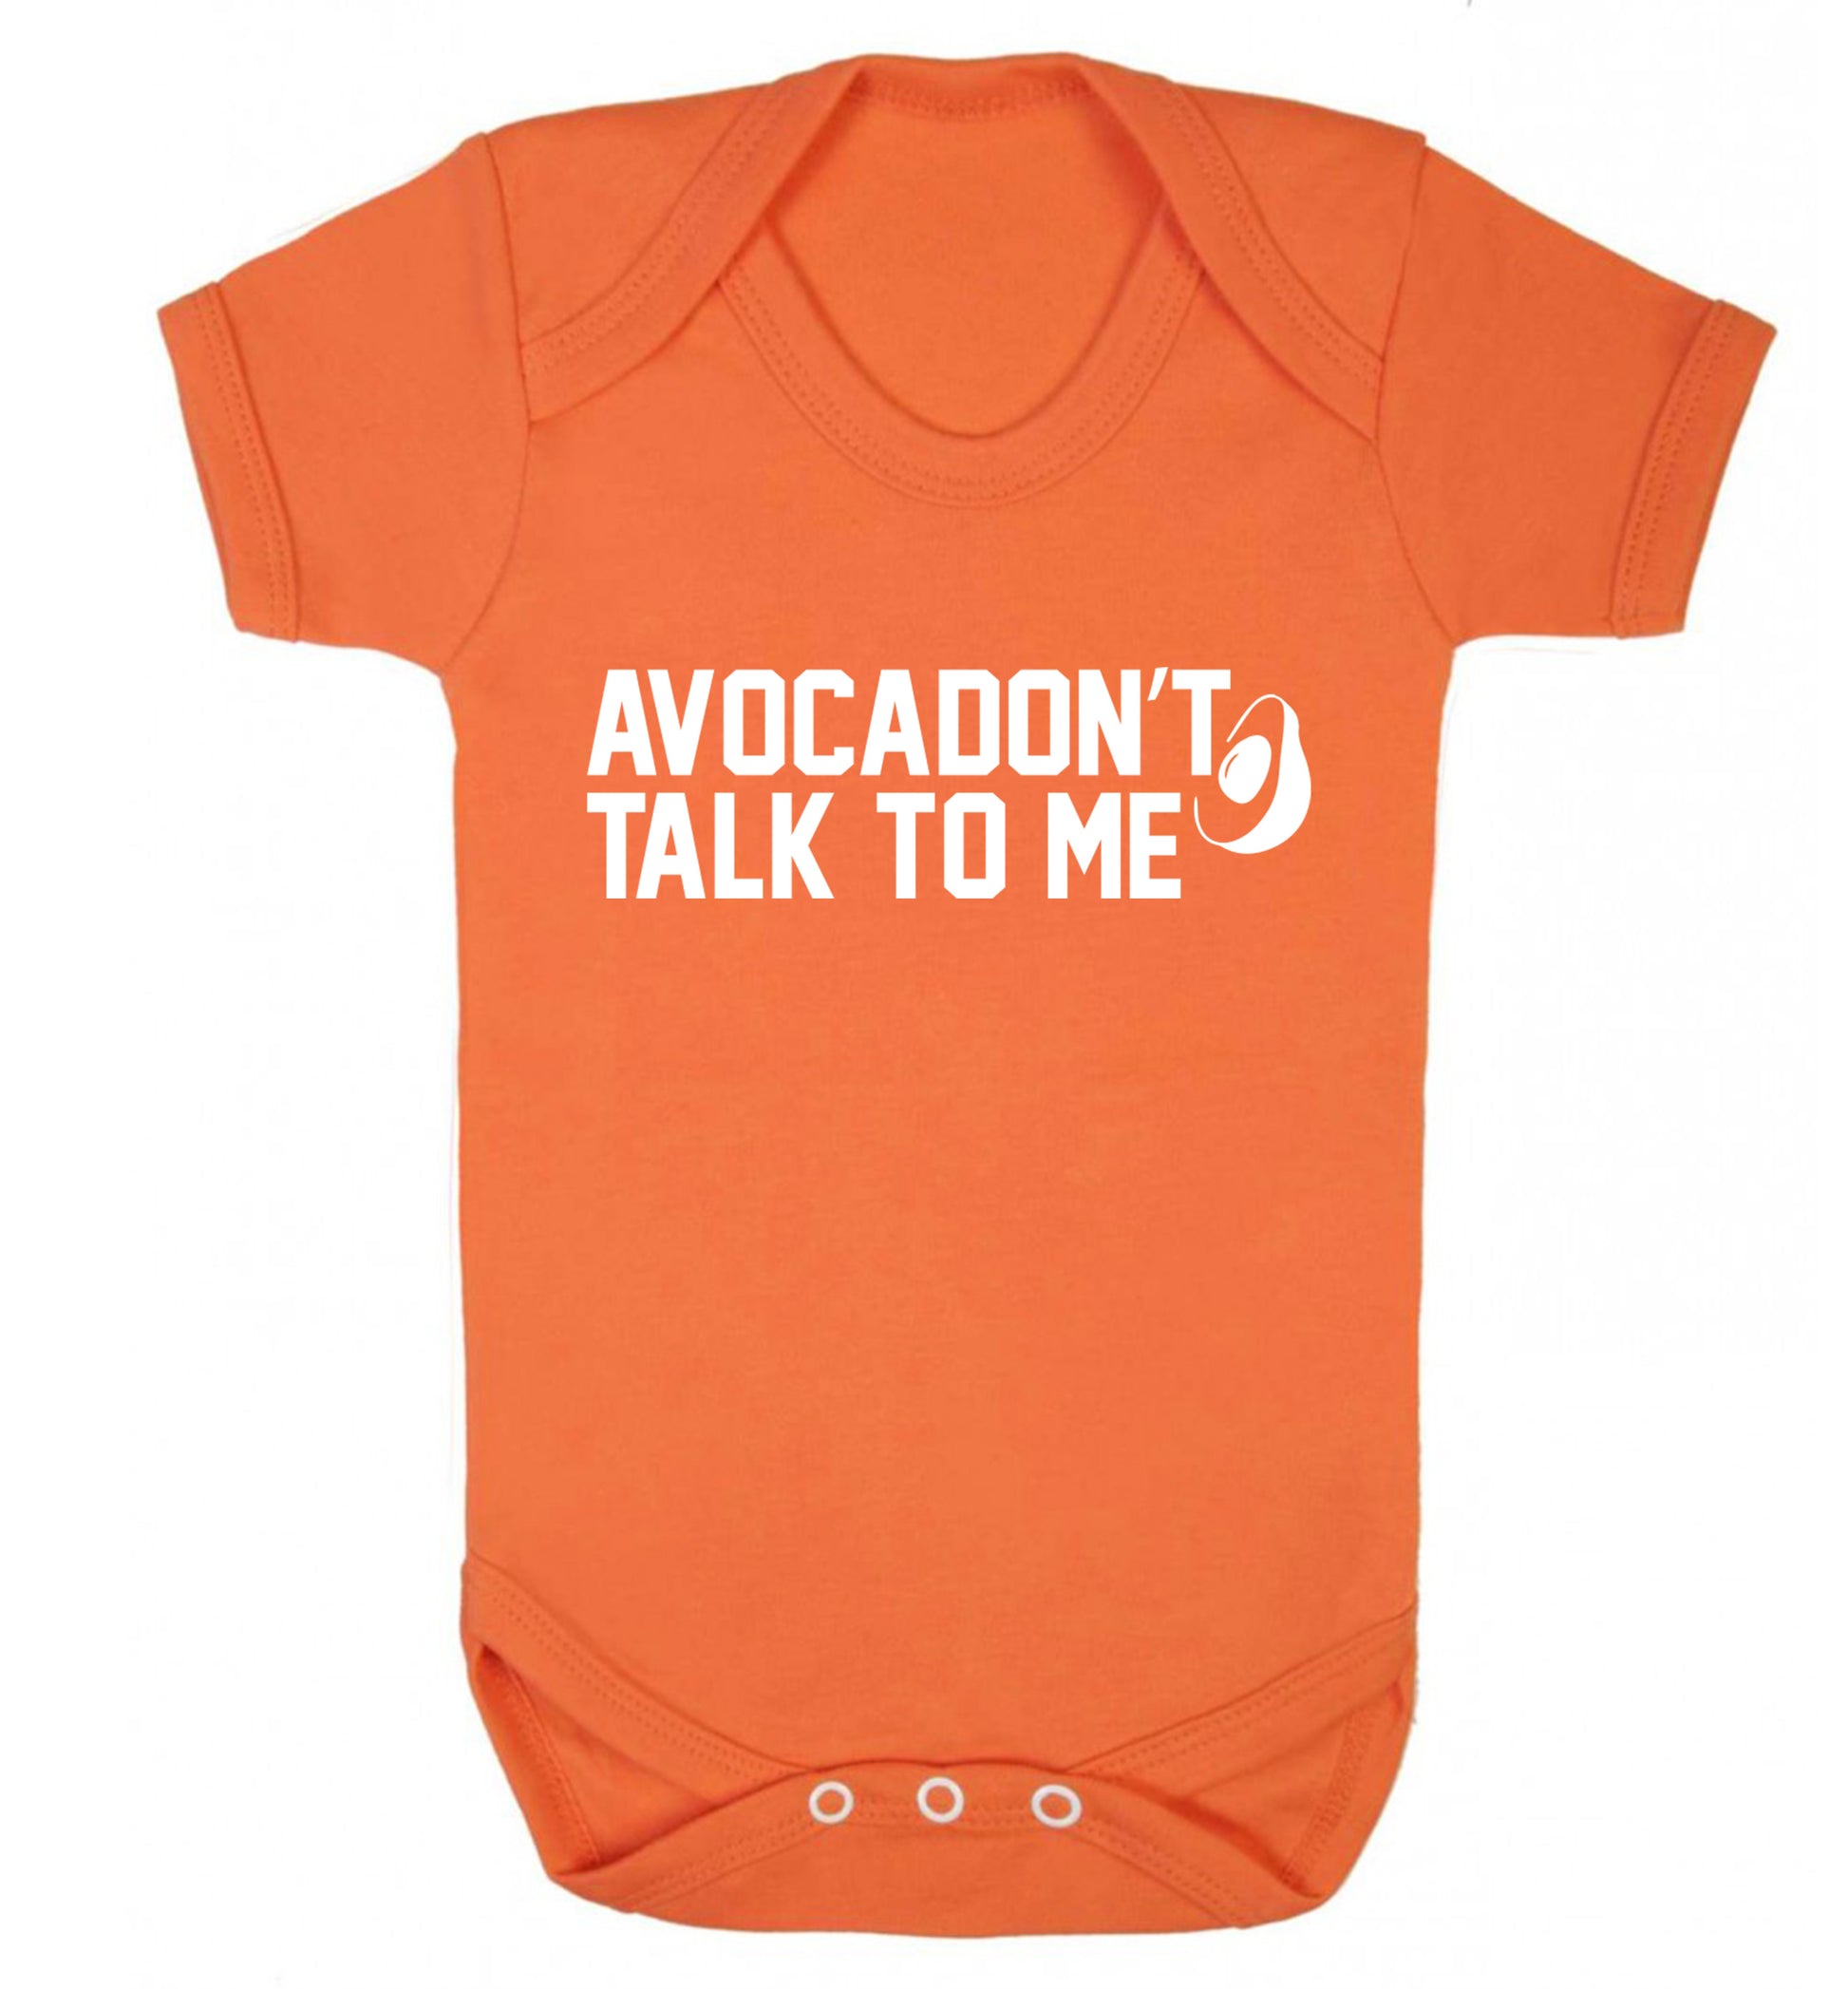 Avocadon't talk to me Baby Vest orange 18-24 months